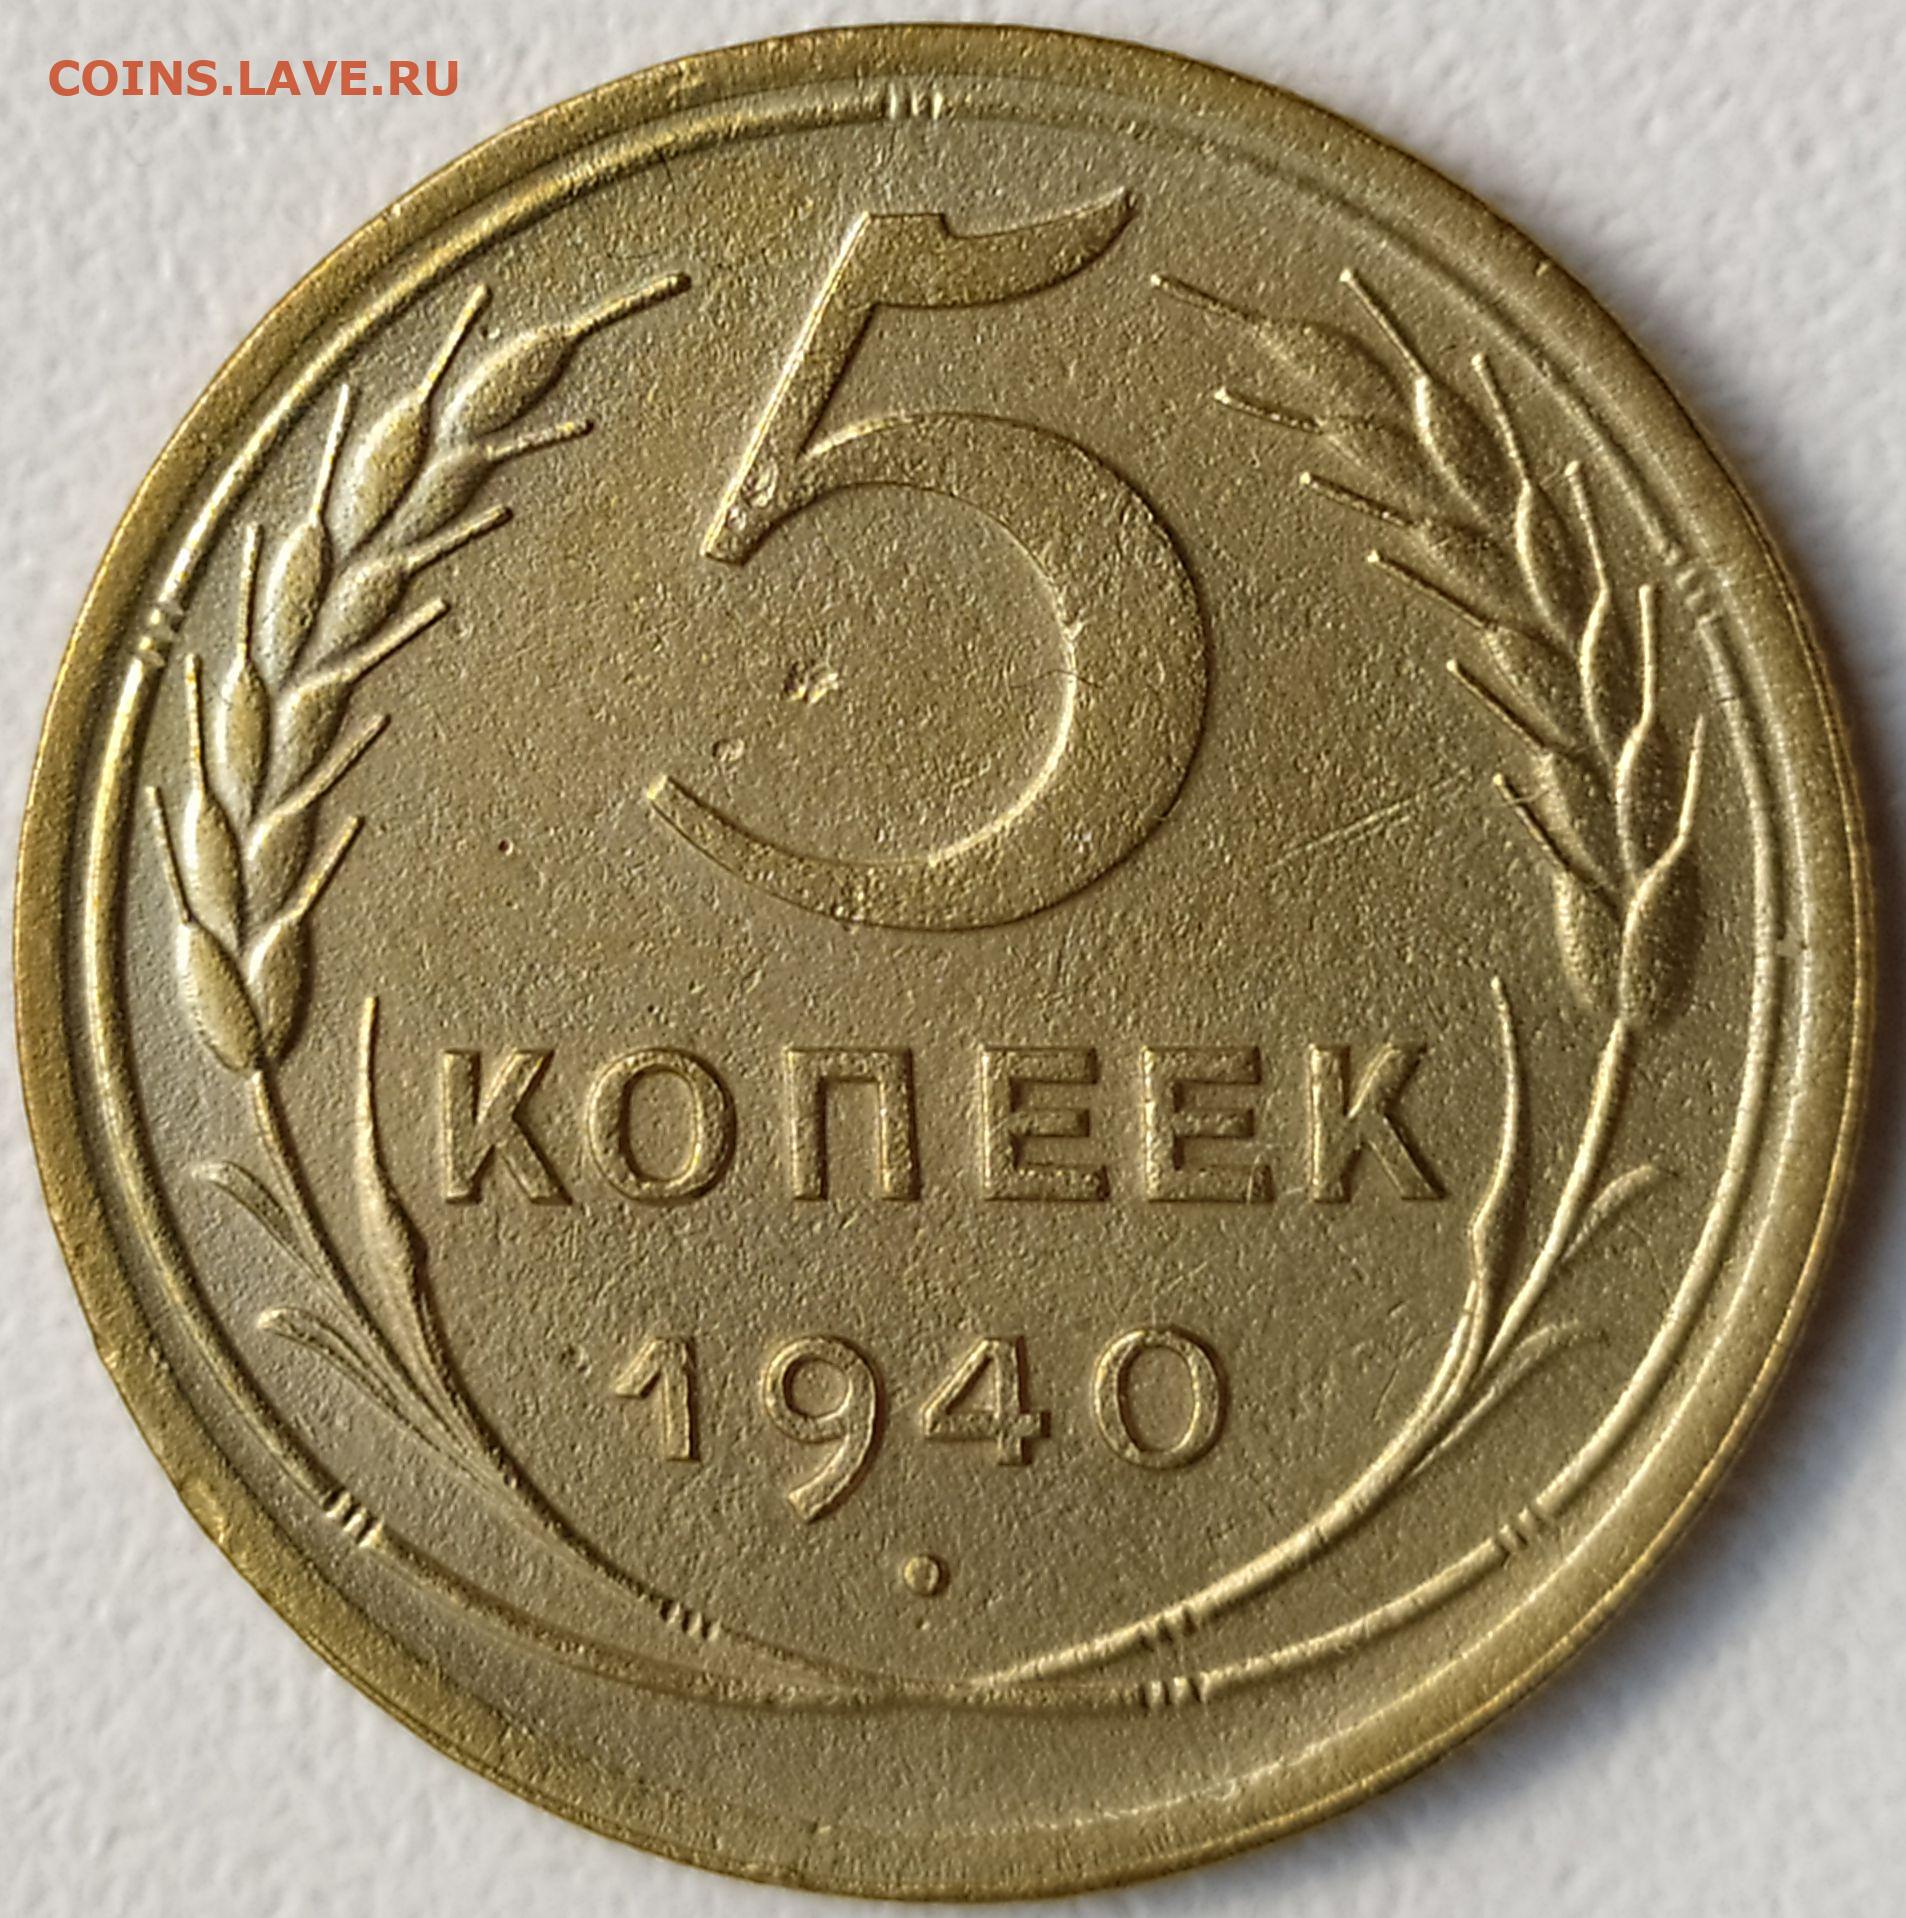 1956 год монеты цена. 5 Копеек 1956. 2 Копейки 1956 года. 5 Копеек 1940 г. Монеты 1956 года.